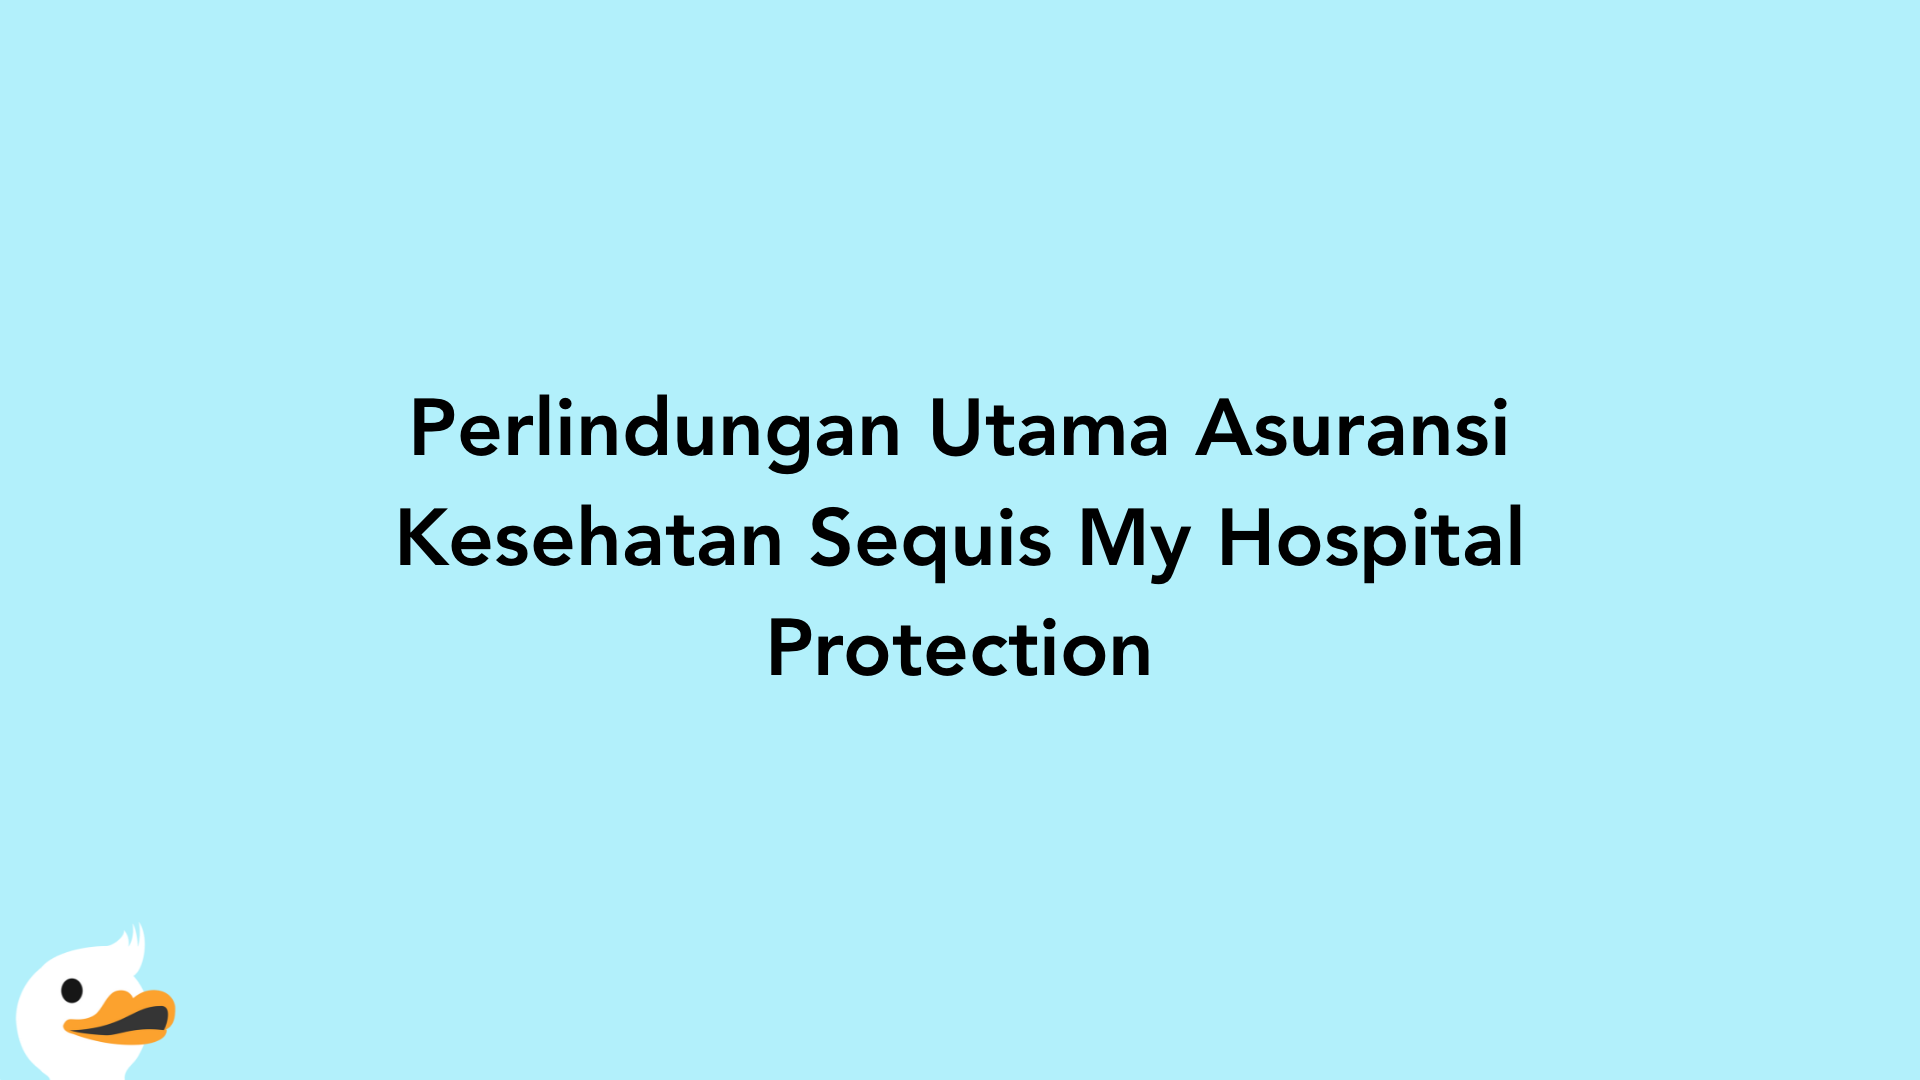 Perlindungan Utama Asuransi Kesehatan Sequis My Hospital Protection